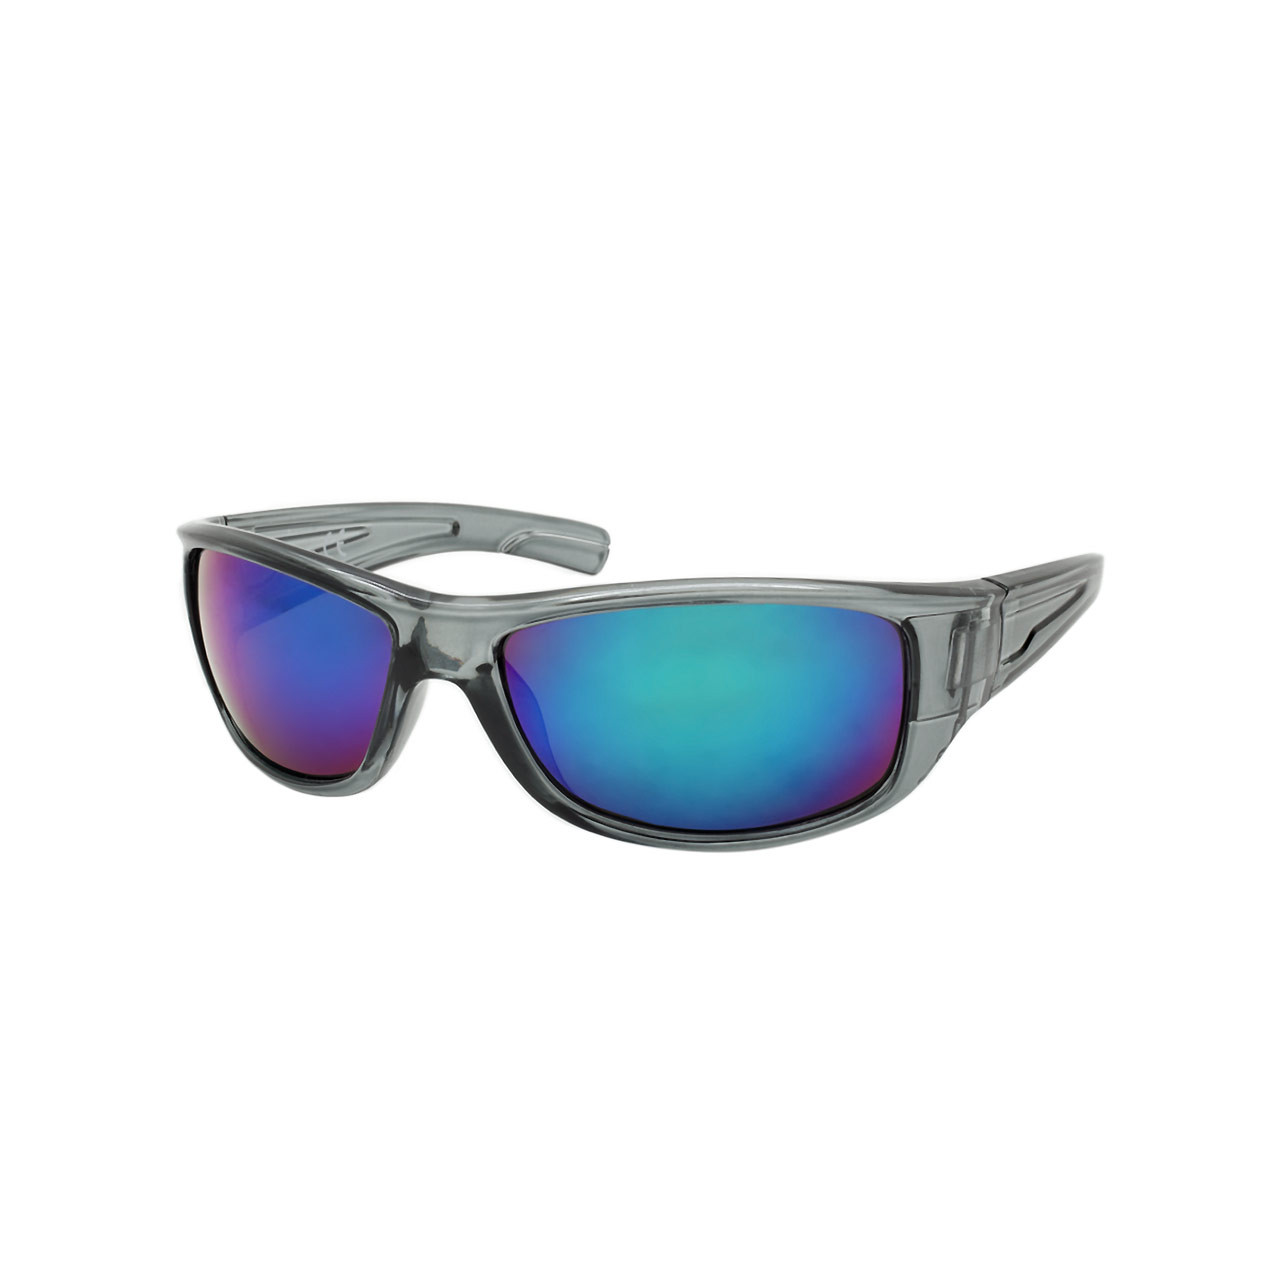 SP08RV | Sunglasses, Displays Reading 12 PCS Glasses, - & ASSTD. Inc. Shark SPORT - Eyes, Wholesale